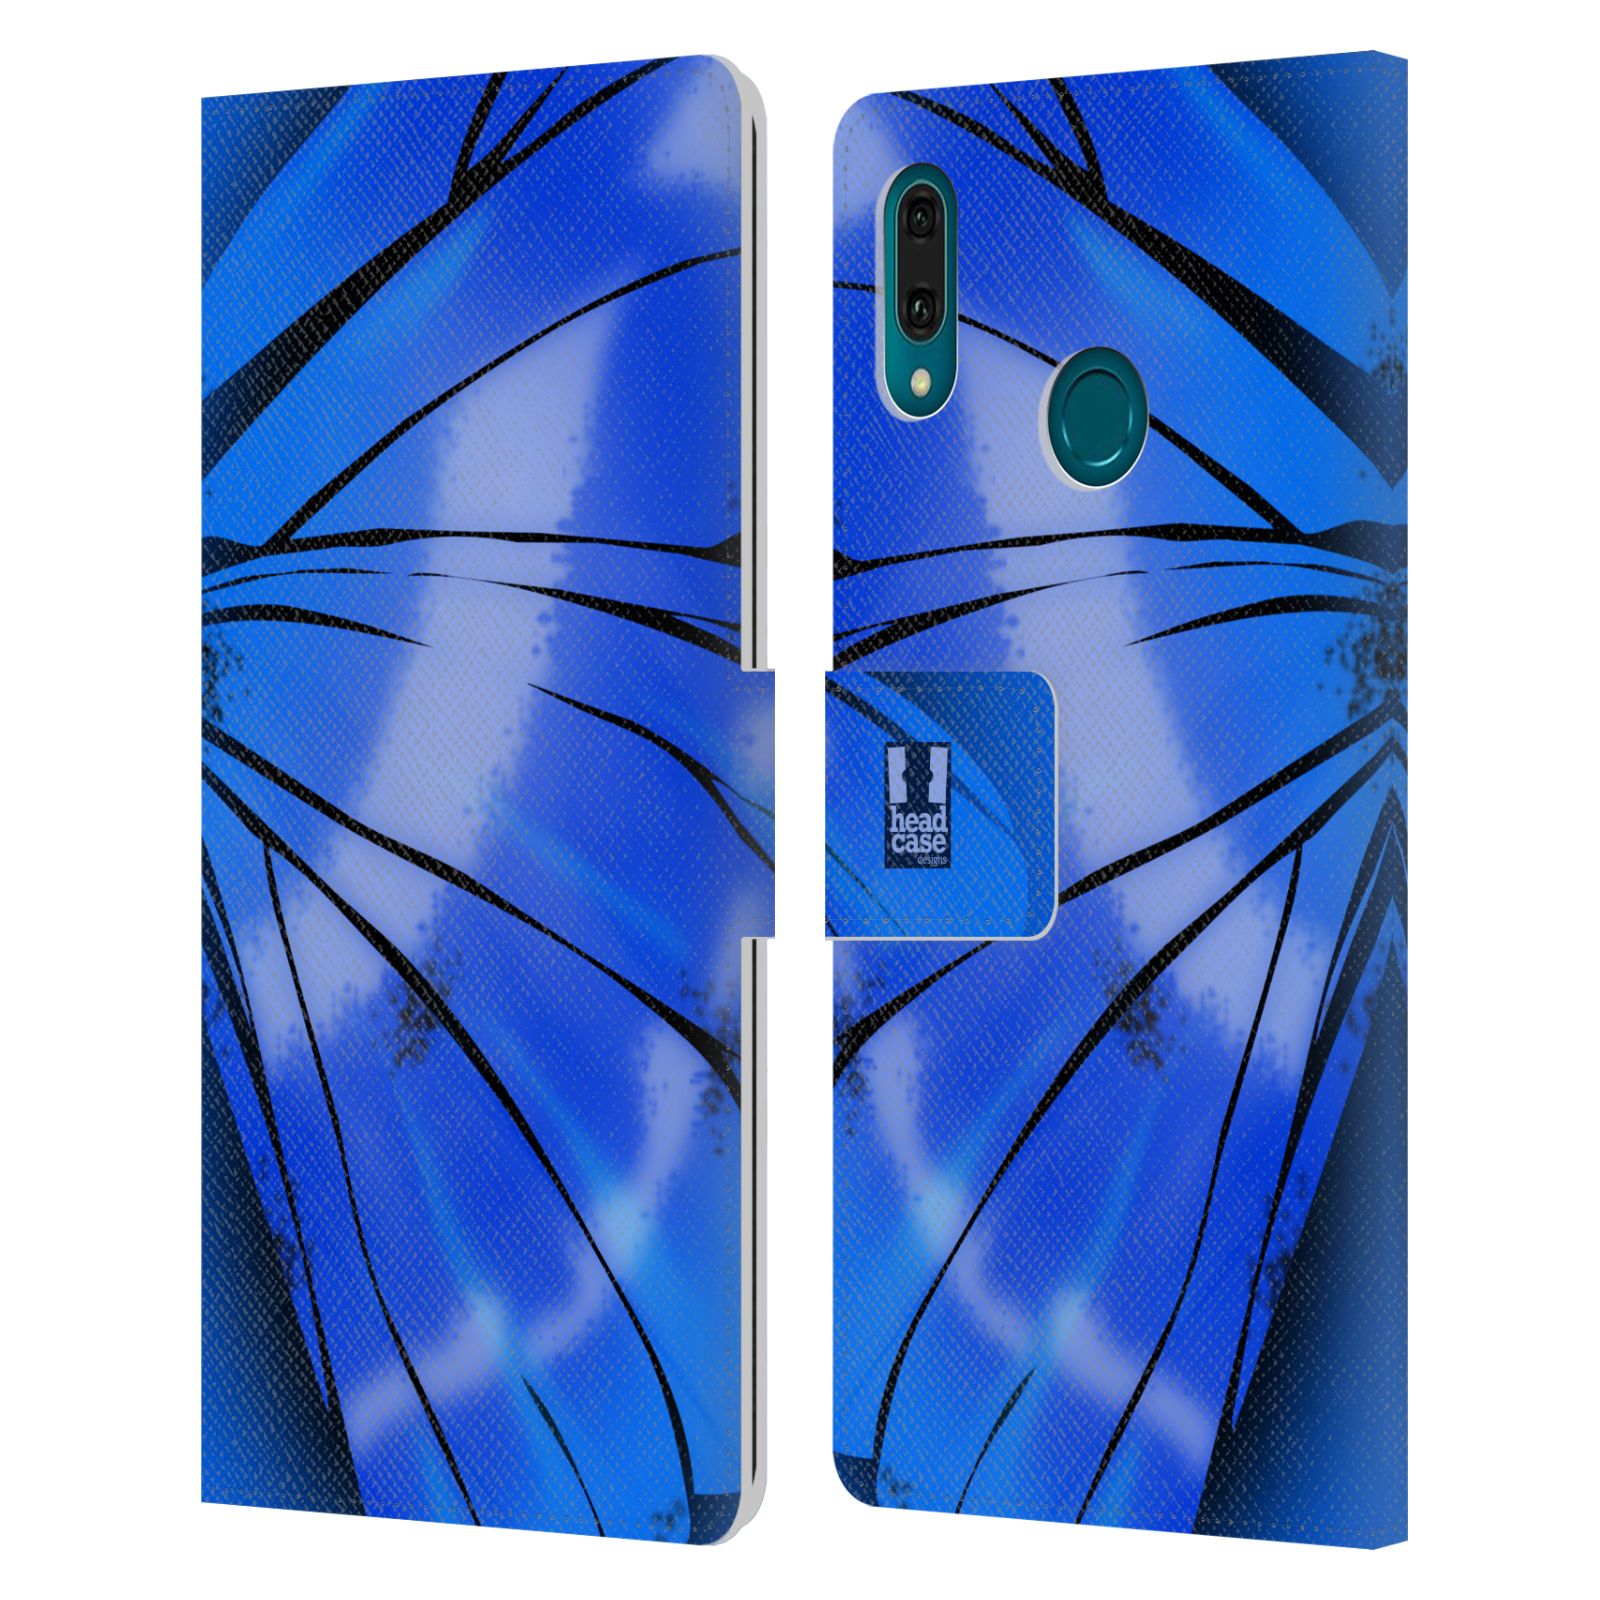 Pouzdro na mobil Huawei Y9 2019 motýl a křídla kreslený vzor modrá zářivá